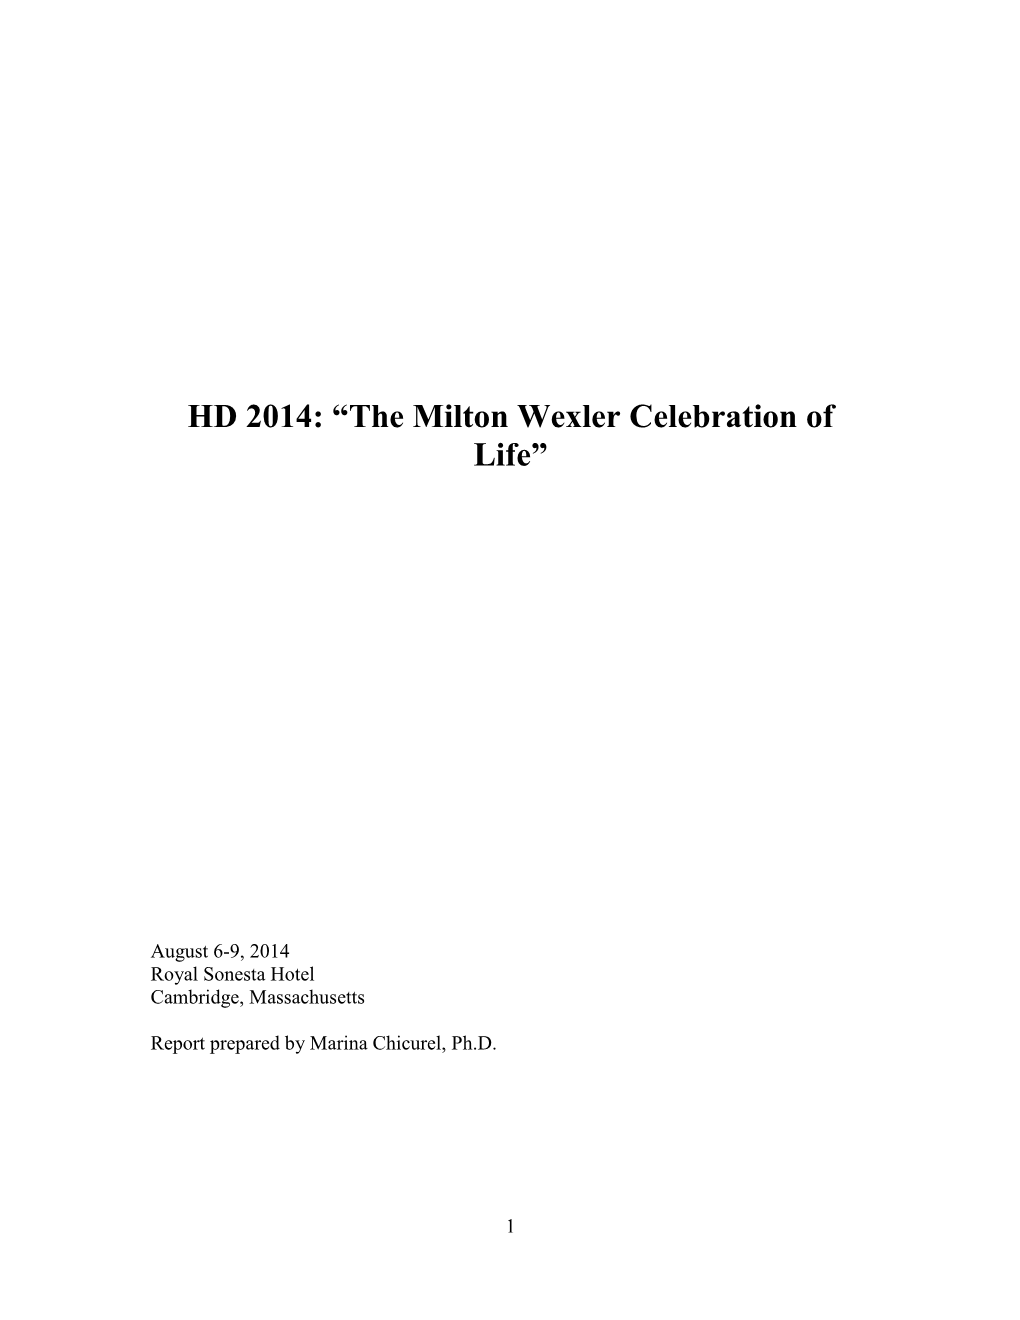 HD 2014: “The Milton Wexler Celebration of Life”